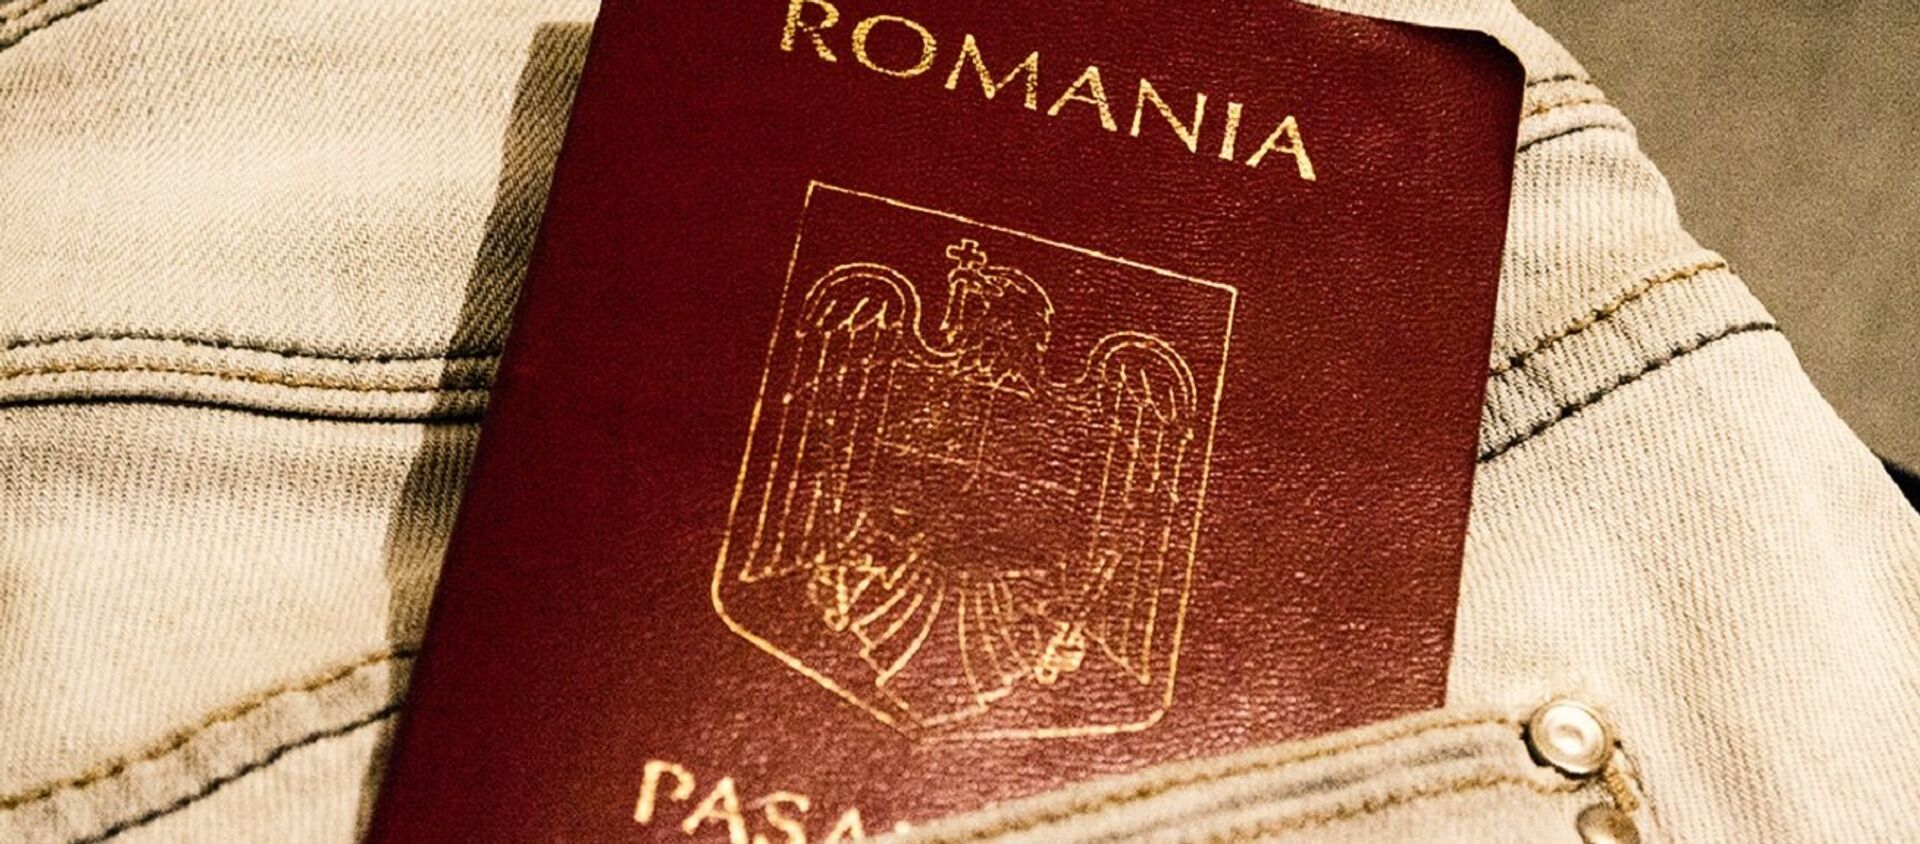 Pașaport românesc - Sputnik Moldova-România, 1920, 03.03.2021